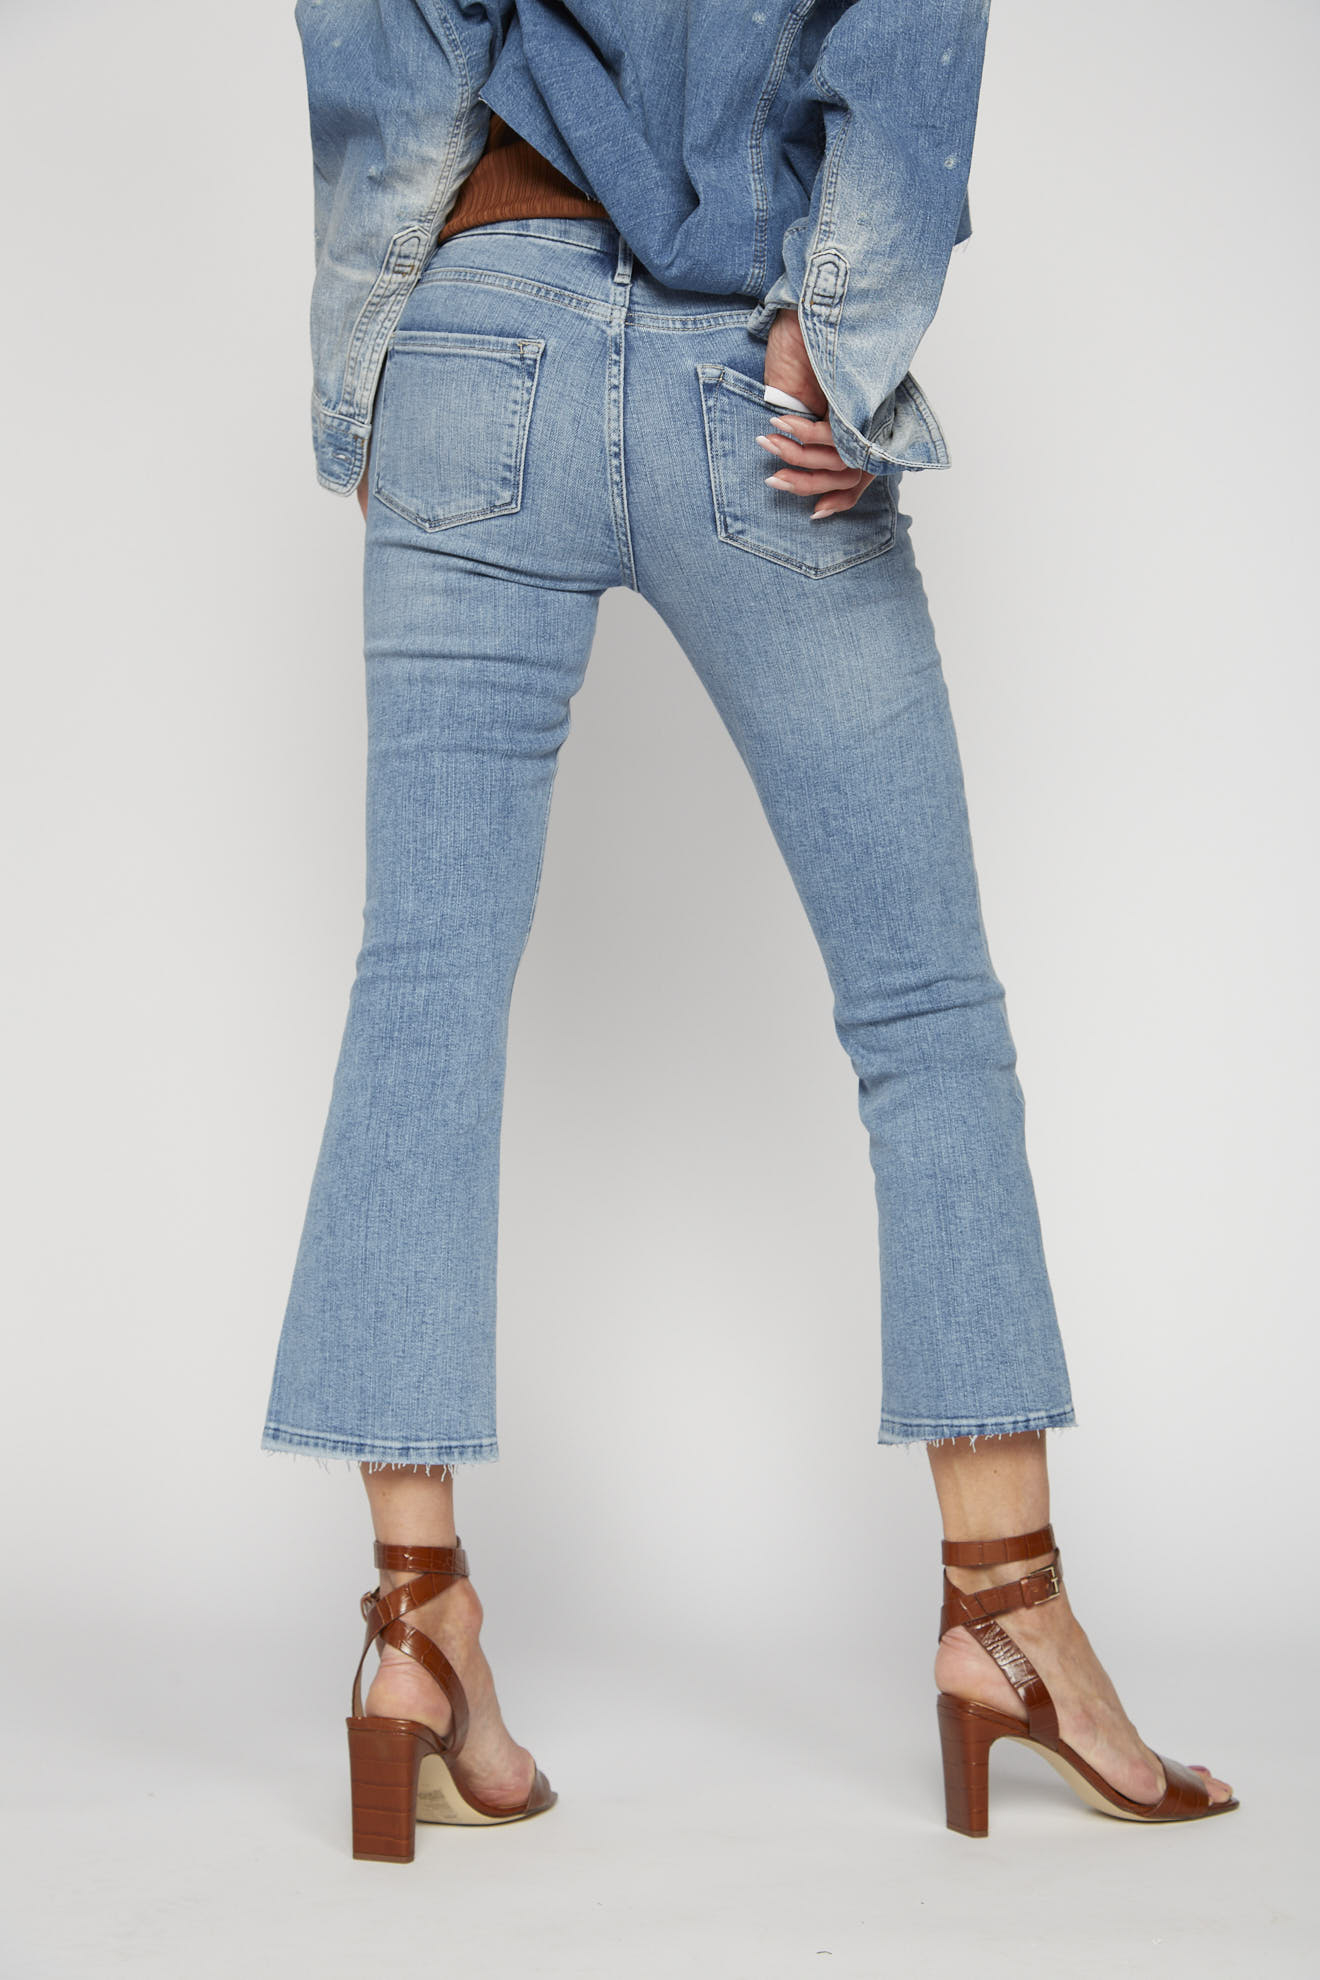 frame jeans denim plain mix model back